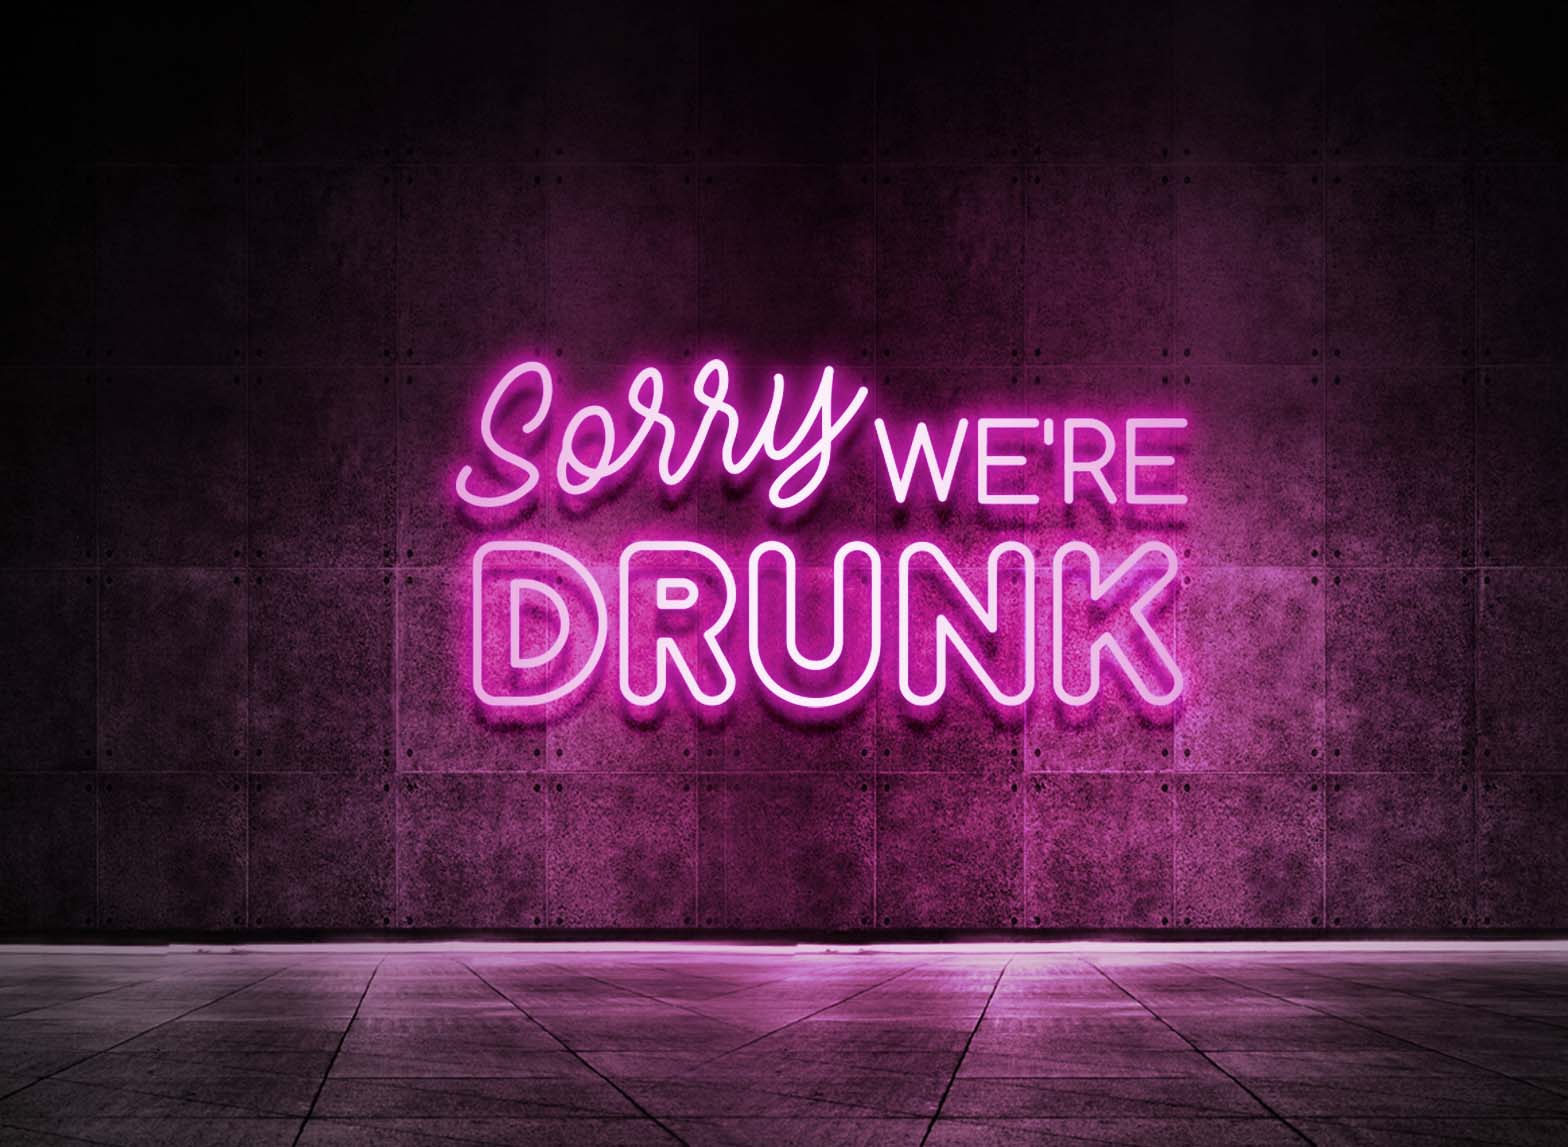 SORRY WE'RE DRUNK